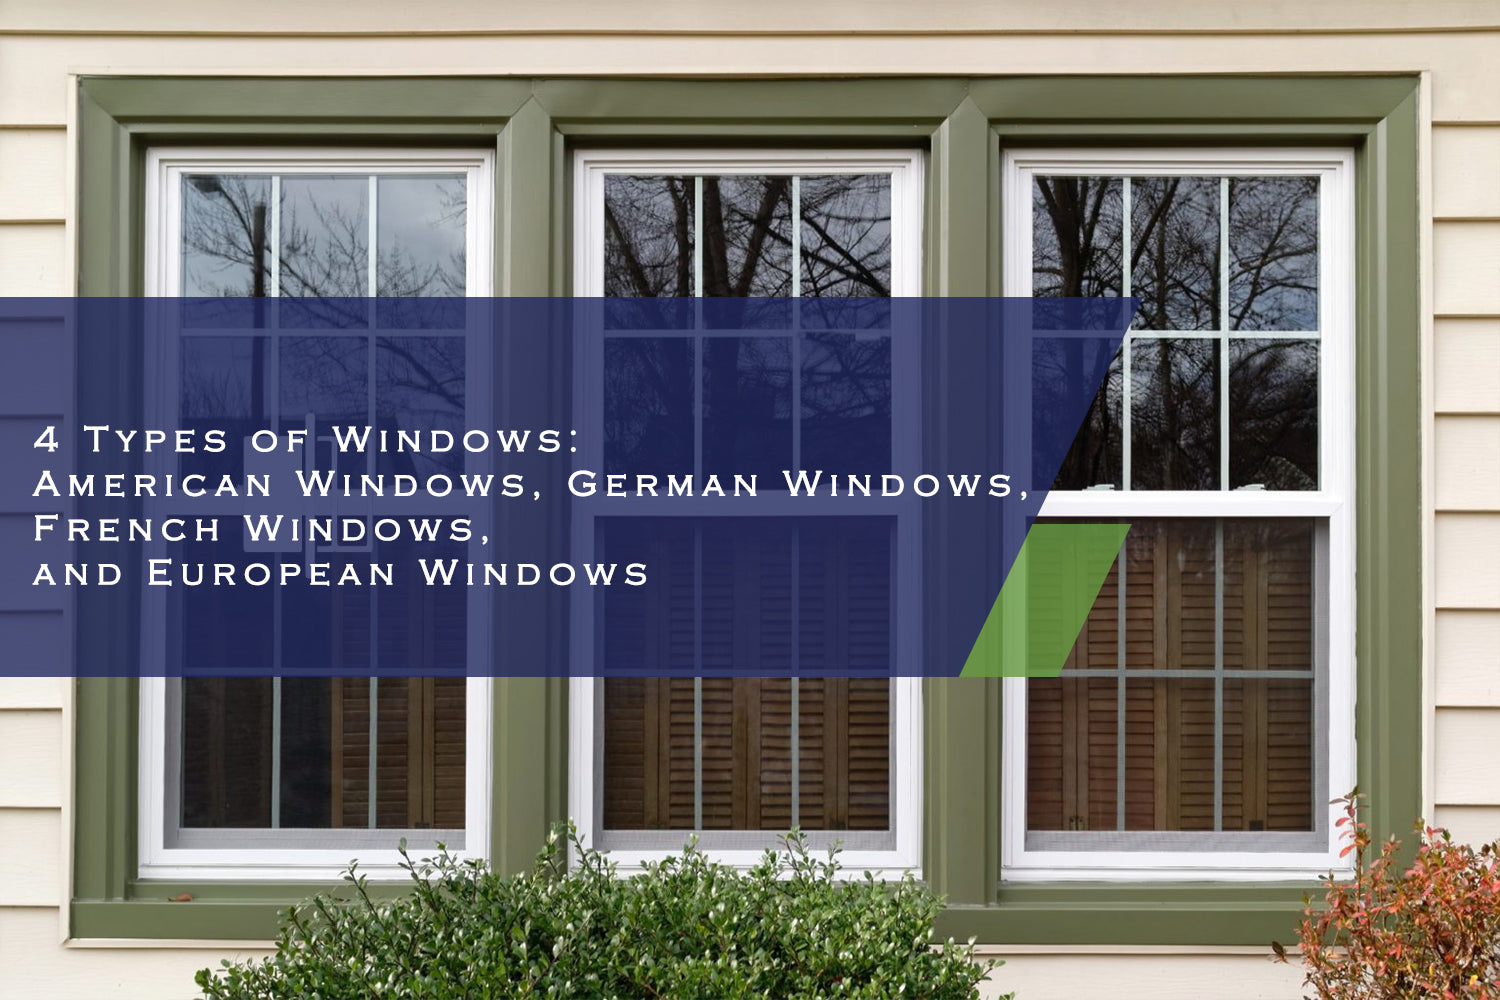 4 Types of Windows: American Windows, German Windows, French Windows, and European Windows